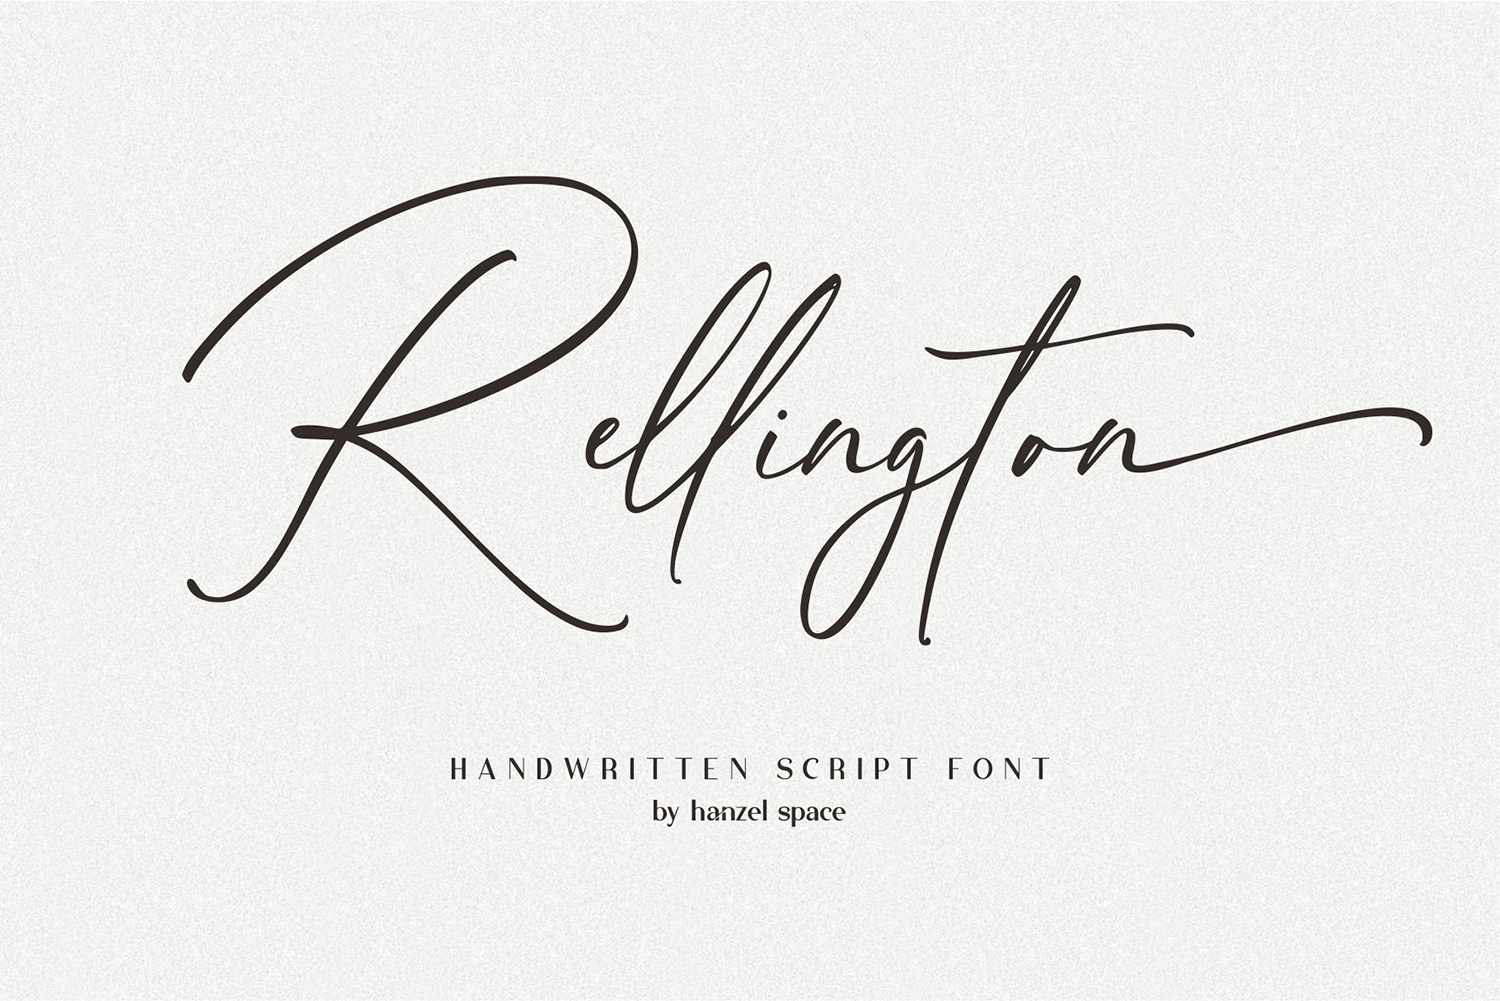 Rellington Free Font